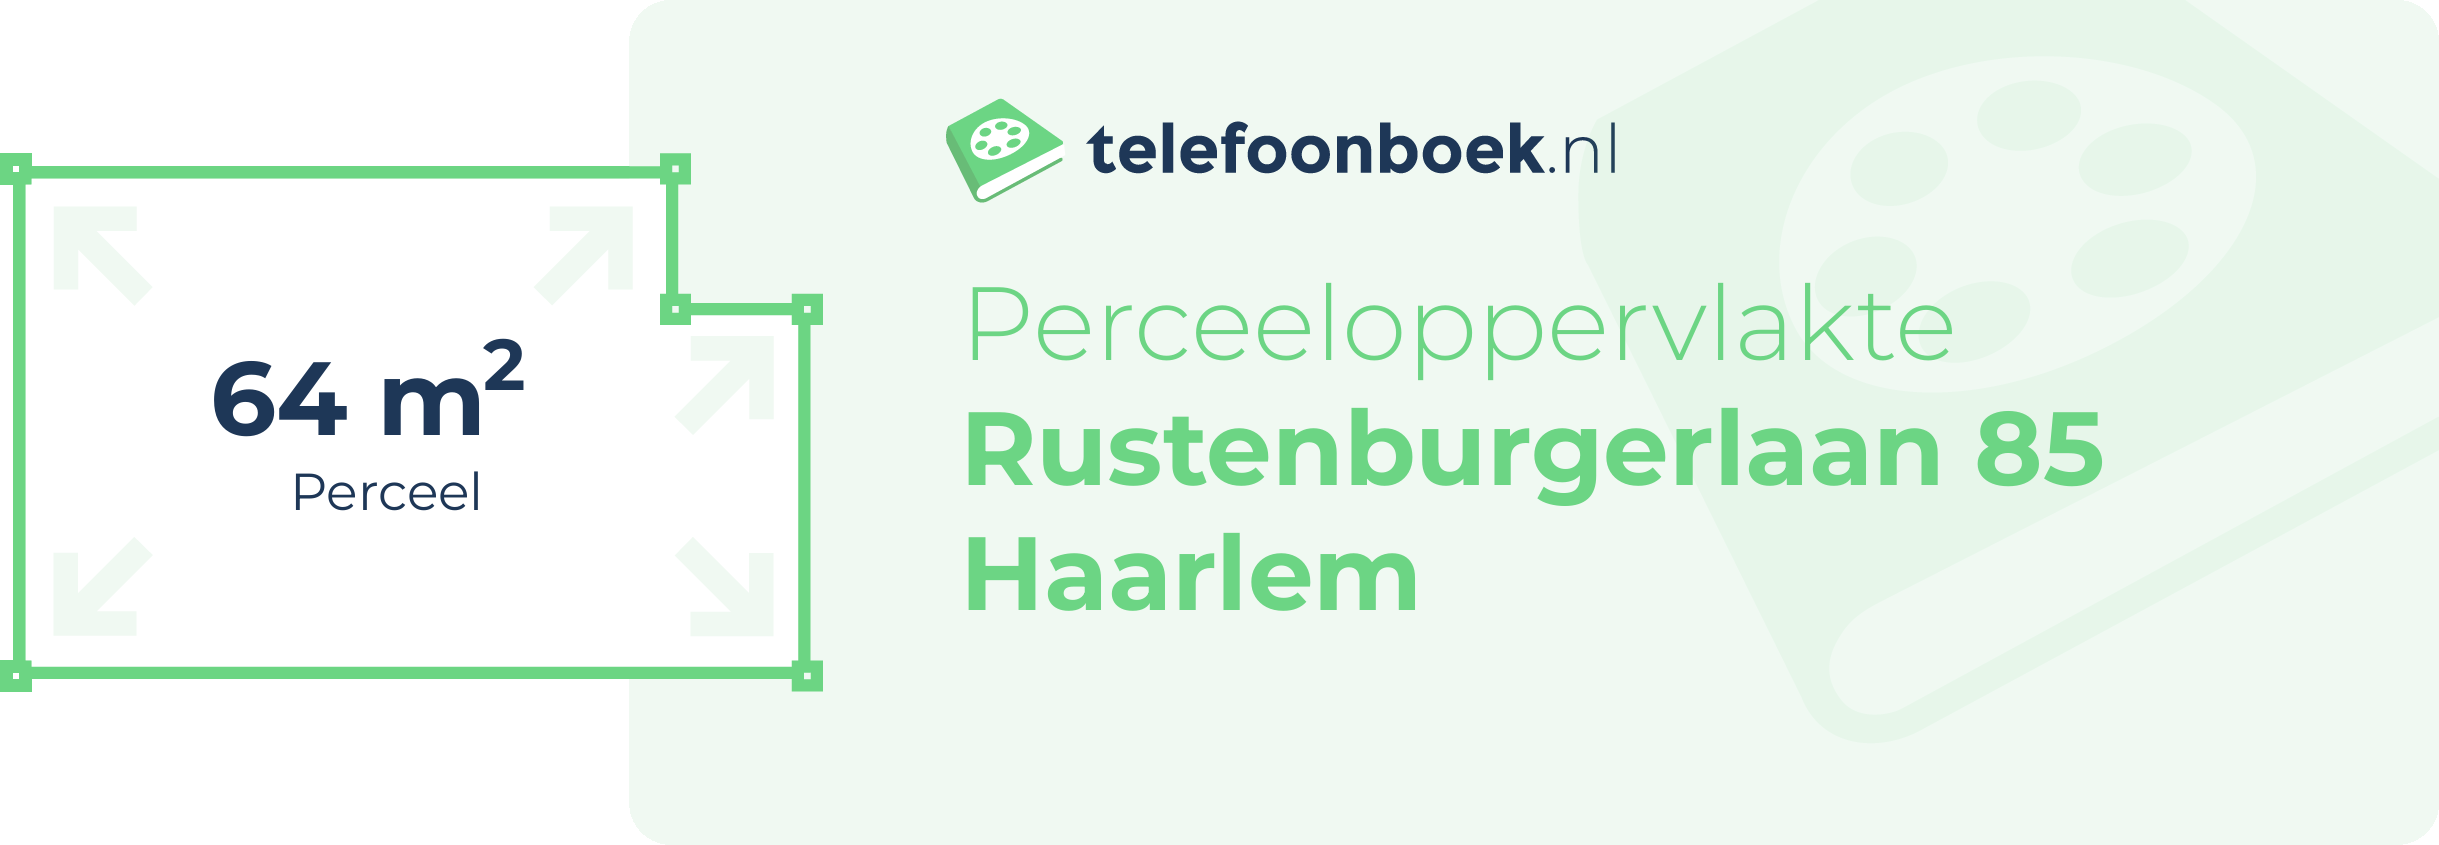 Perceeloppervlakte Rustenburgerlaan 85 Haarlem